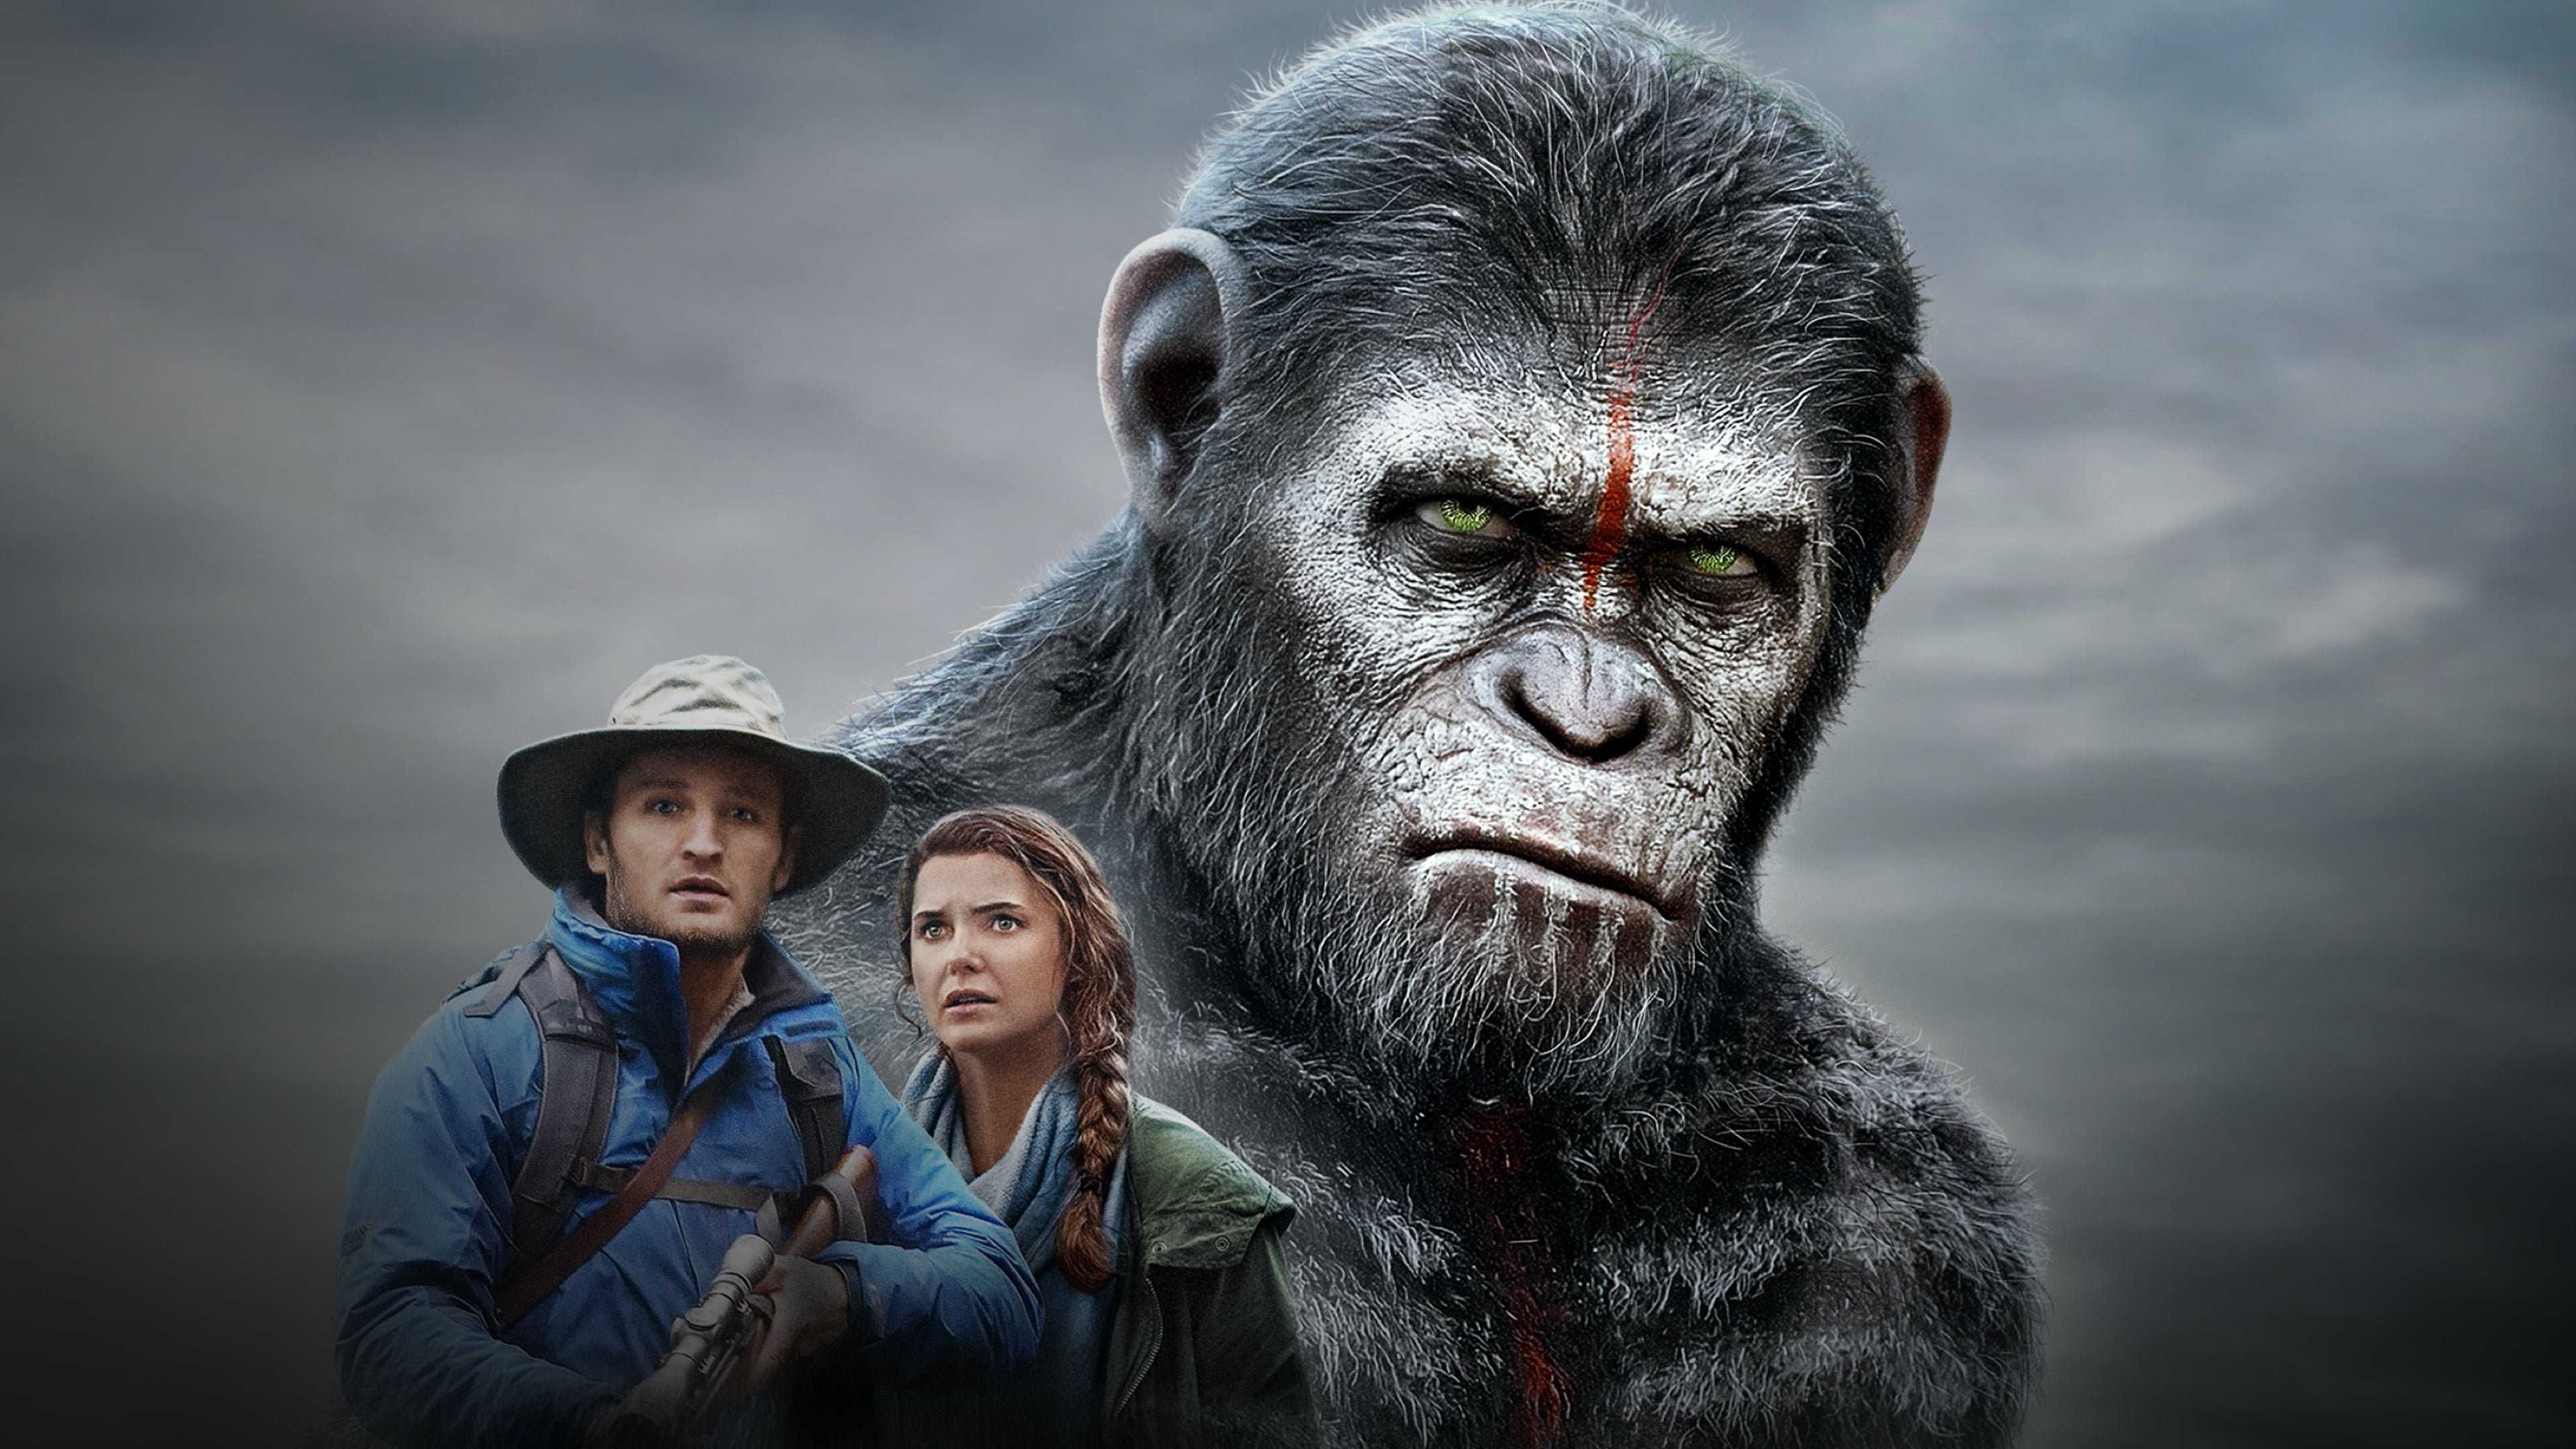 Планета обезьян 4 - фильм 2020: трейлер, дата выхода